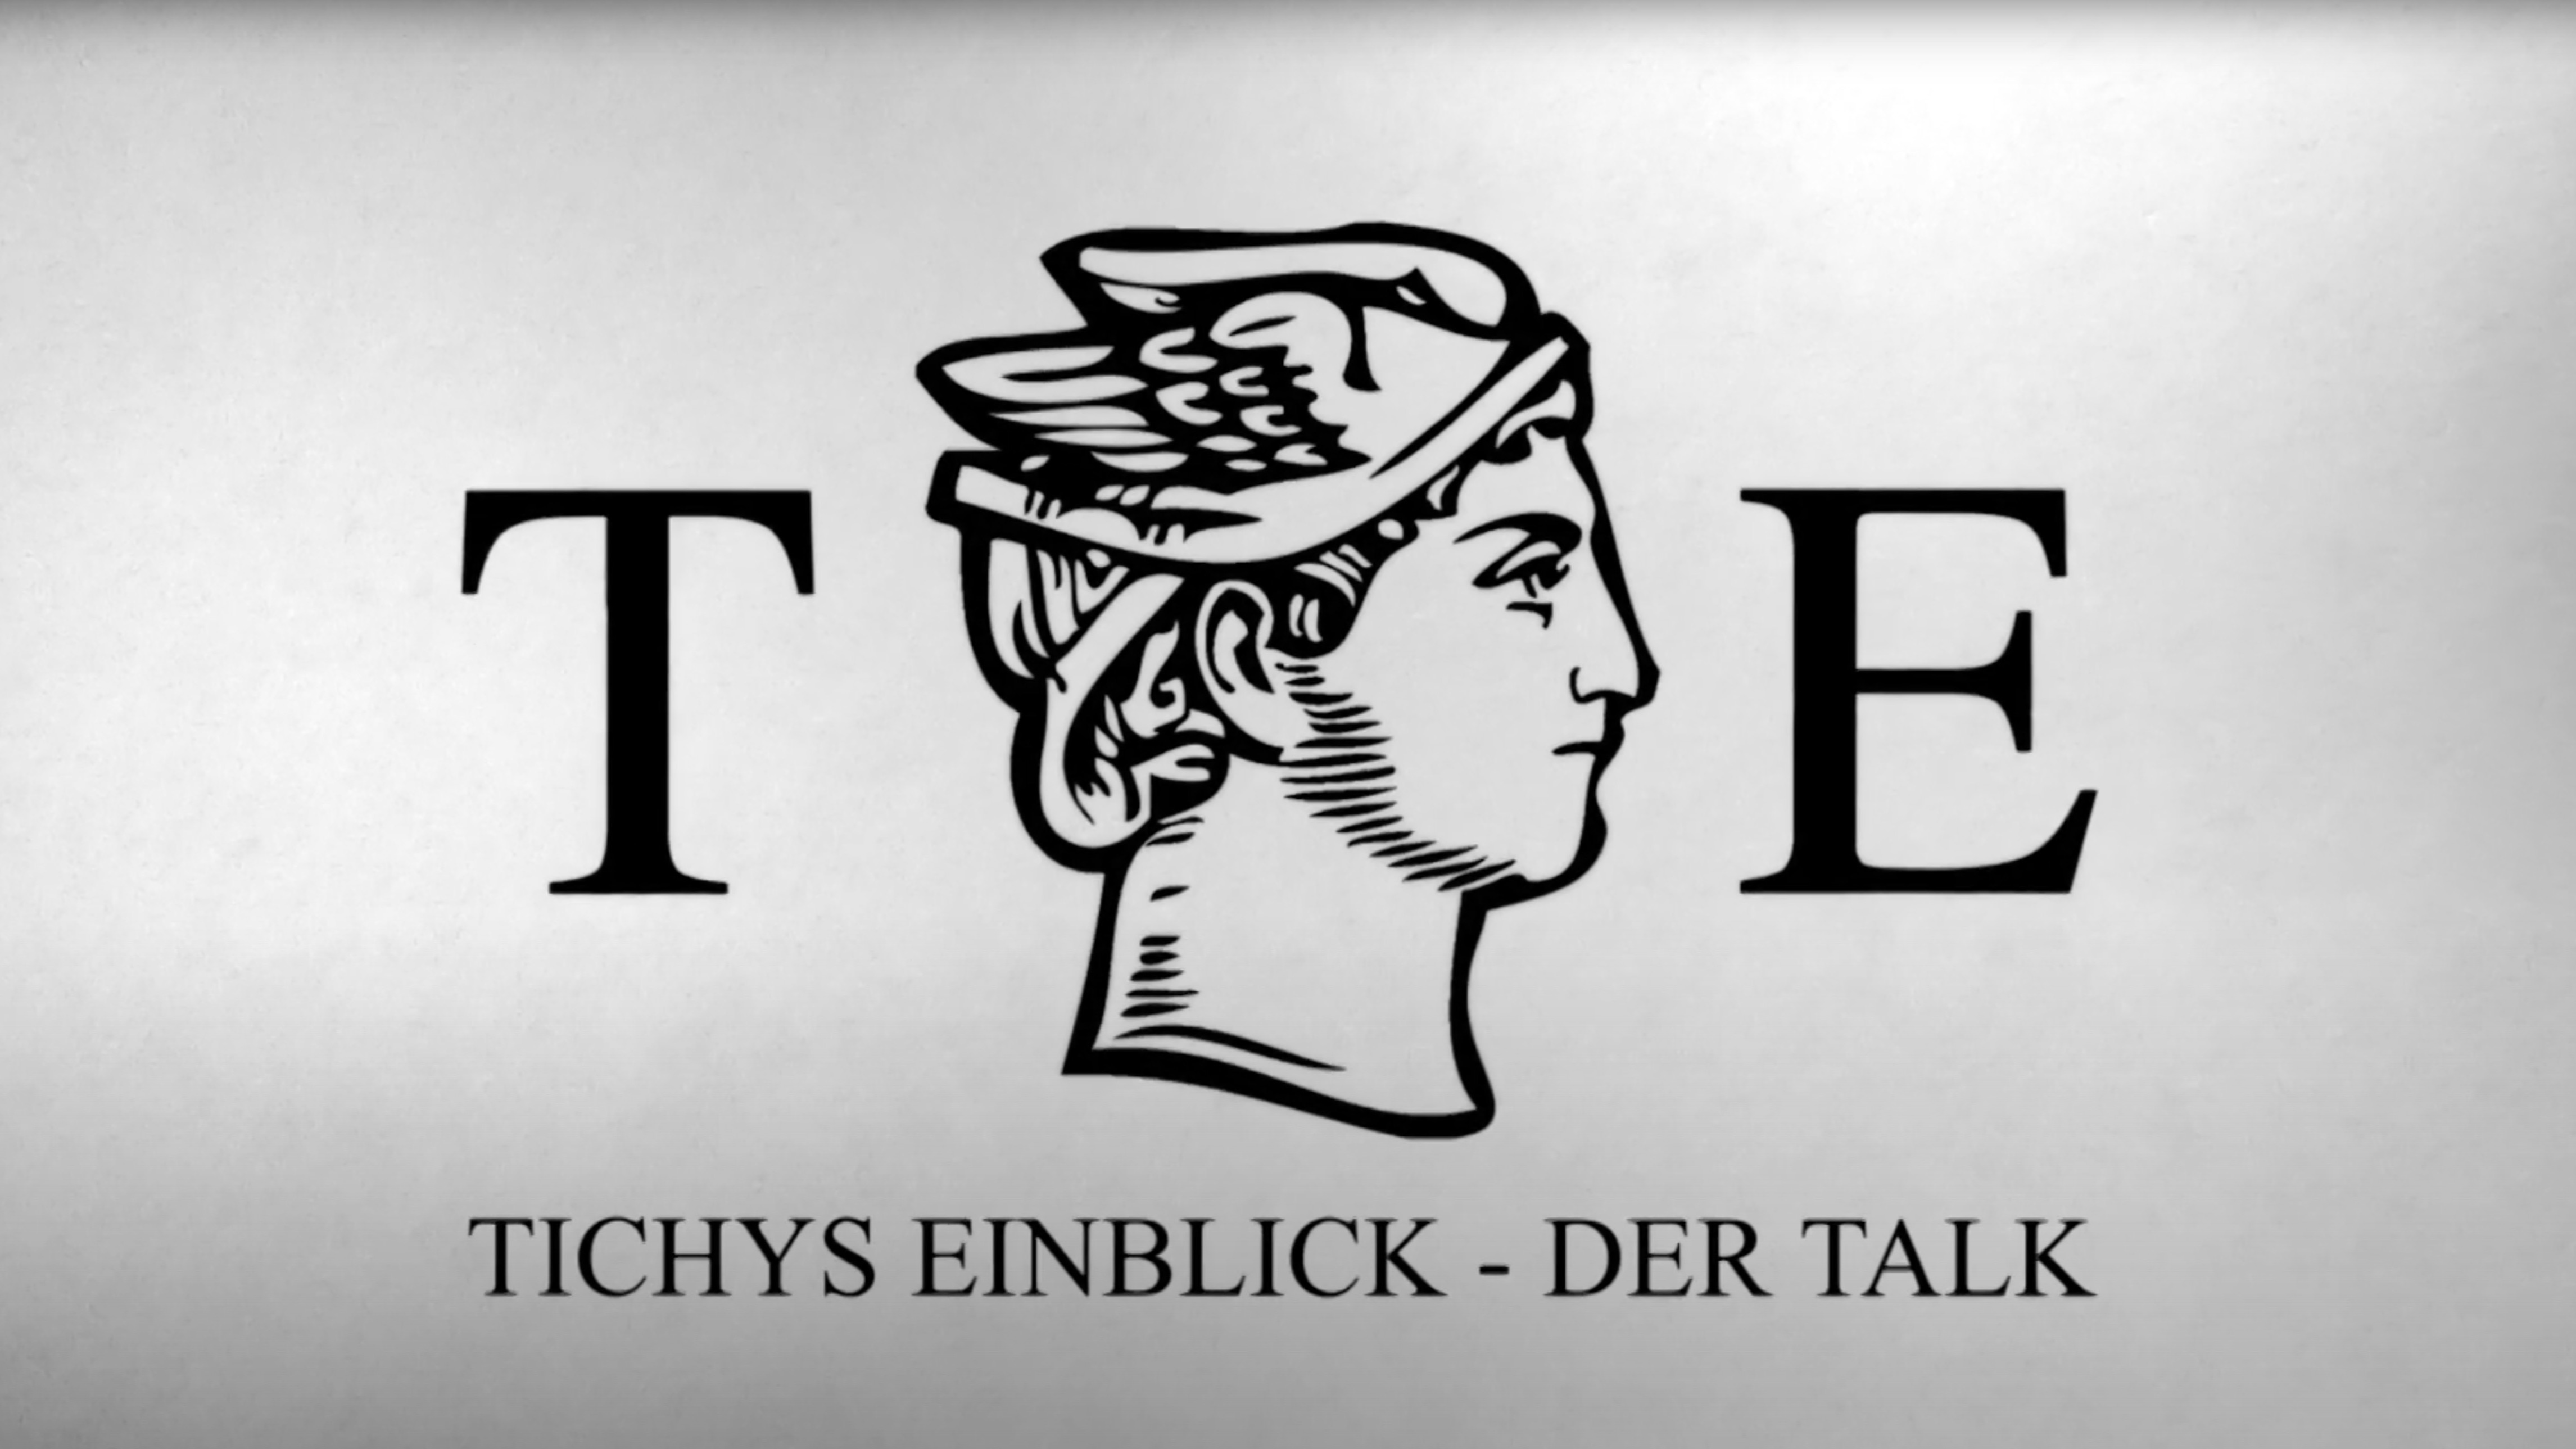 Tichys Einblick - Der Talk (Heribert Prantl)